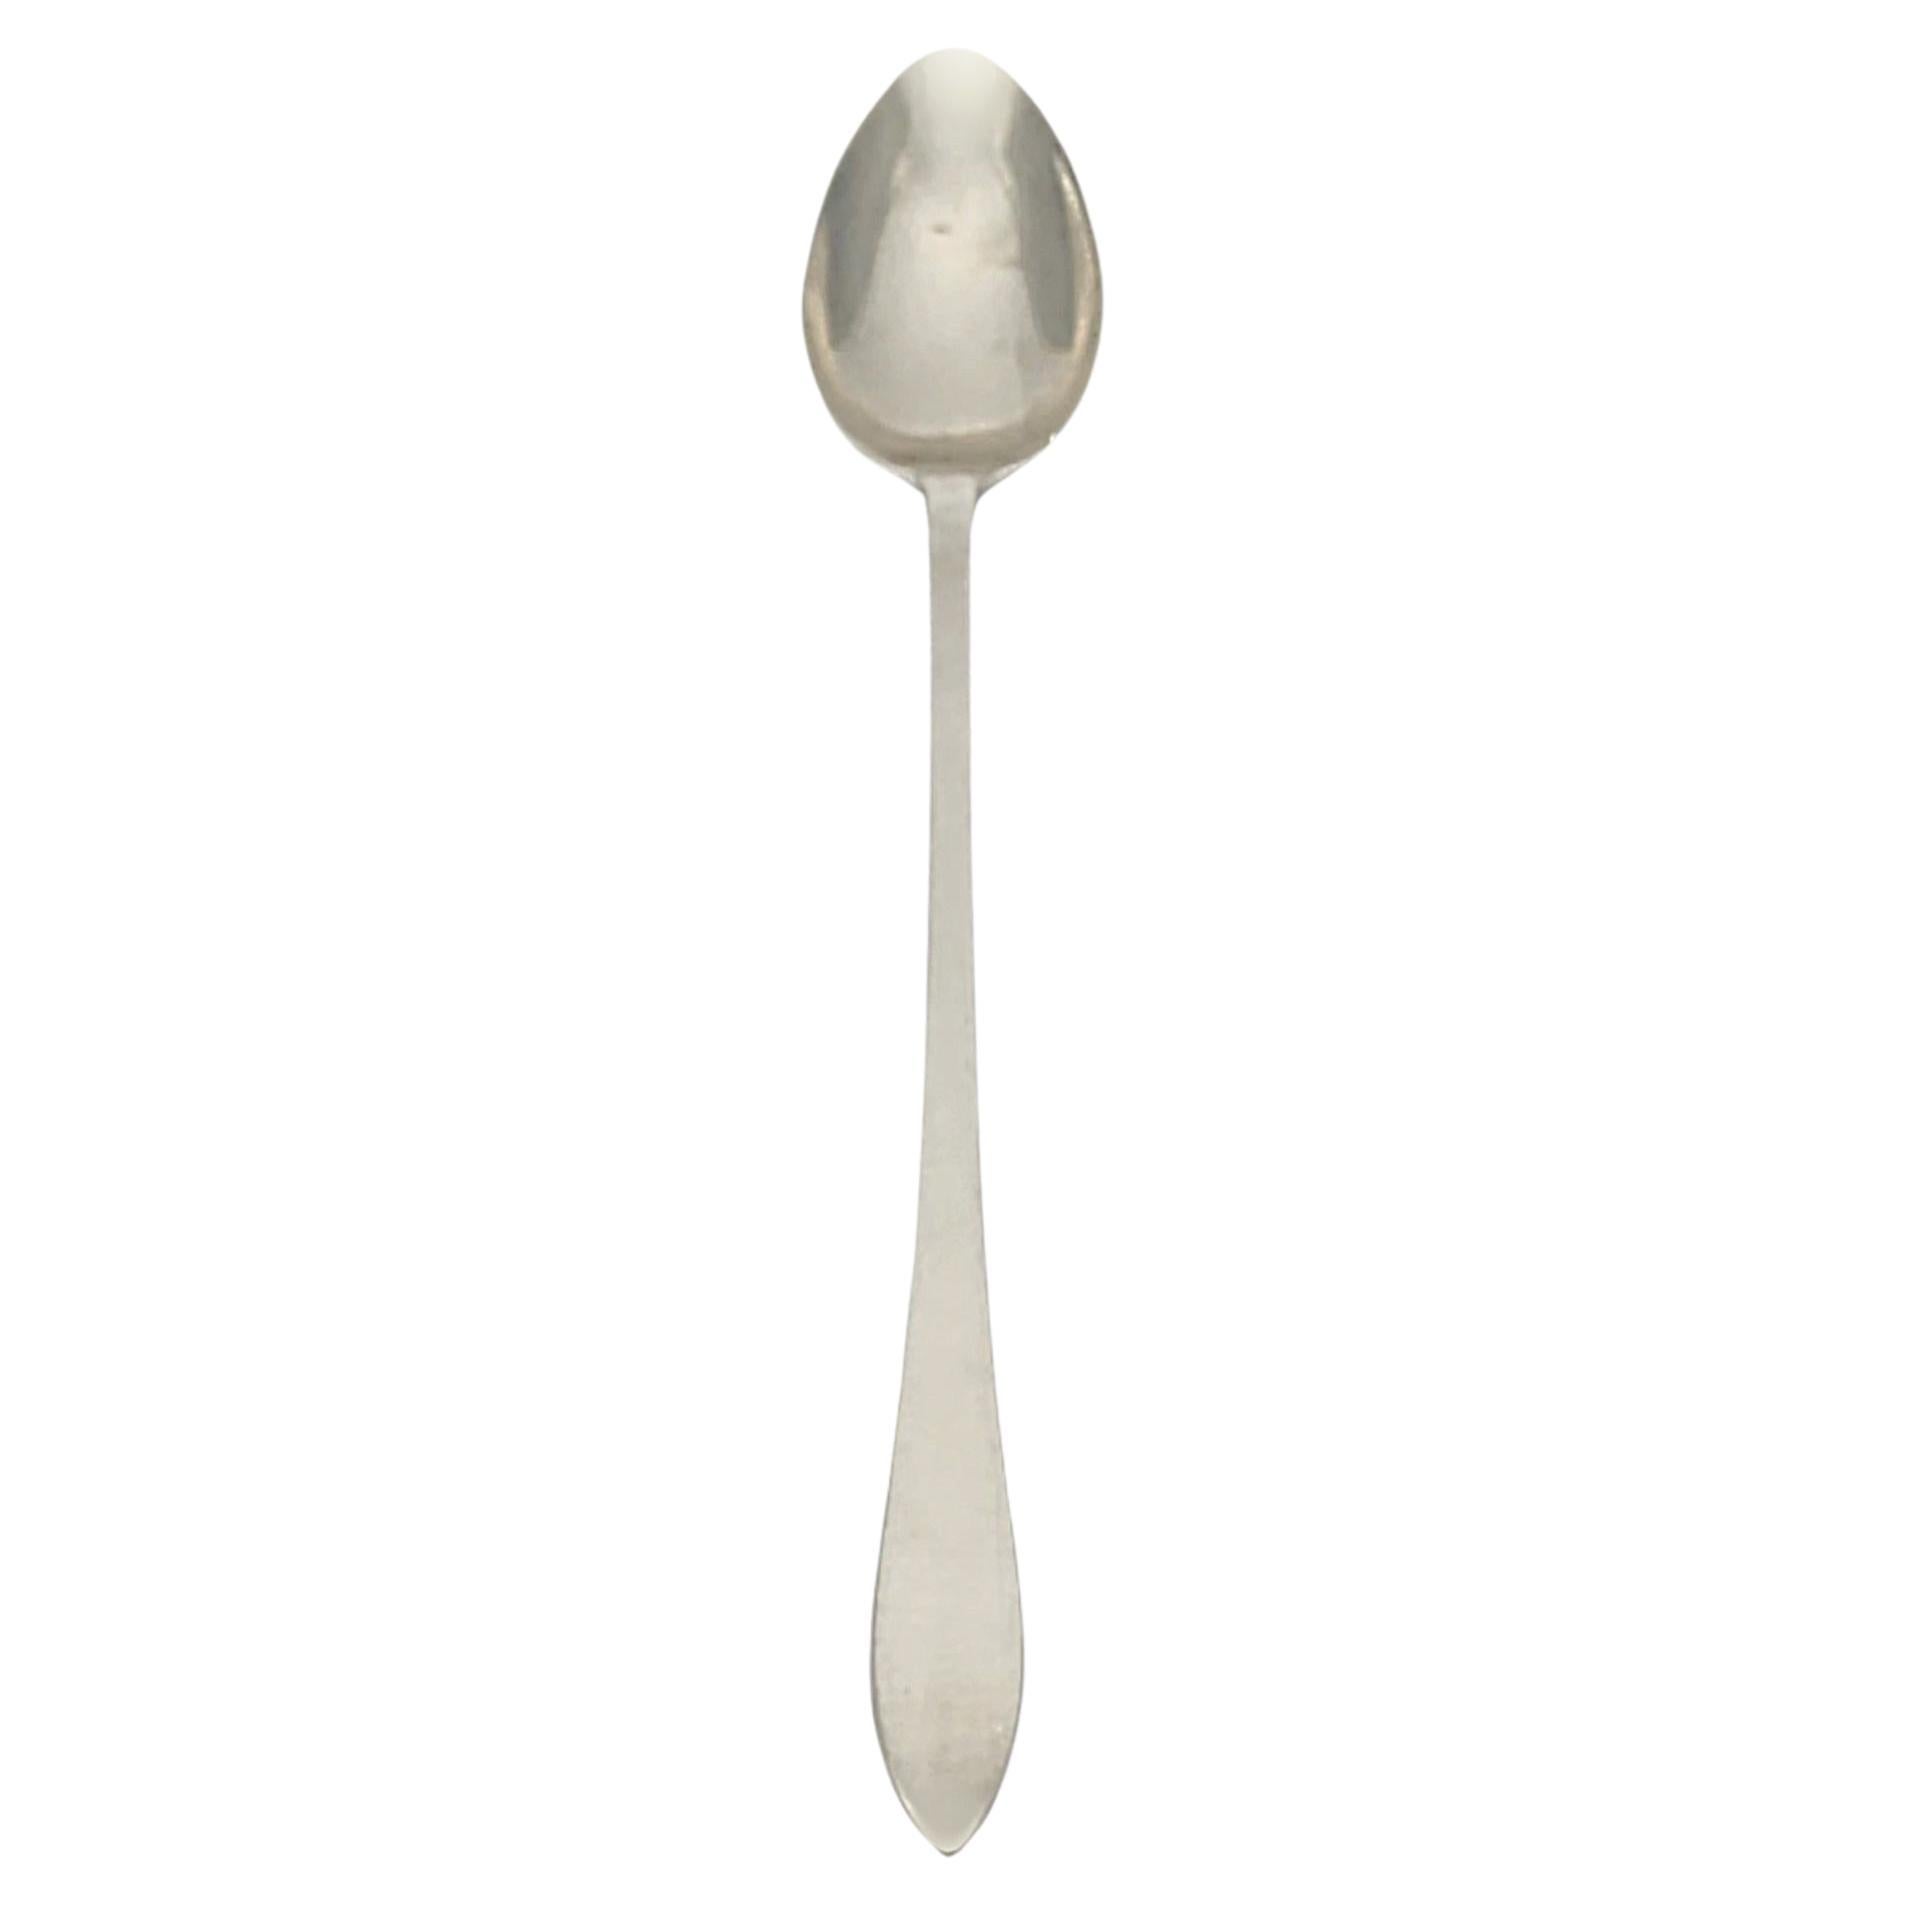 Tiffany & Co Faneuil Sterling Silver Baby Feeding Spoon #15490